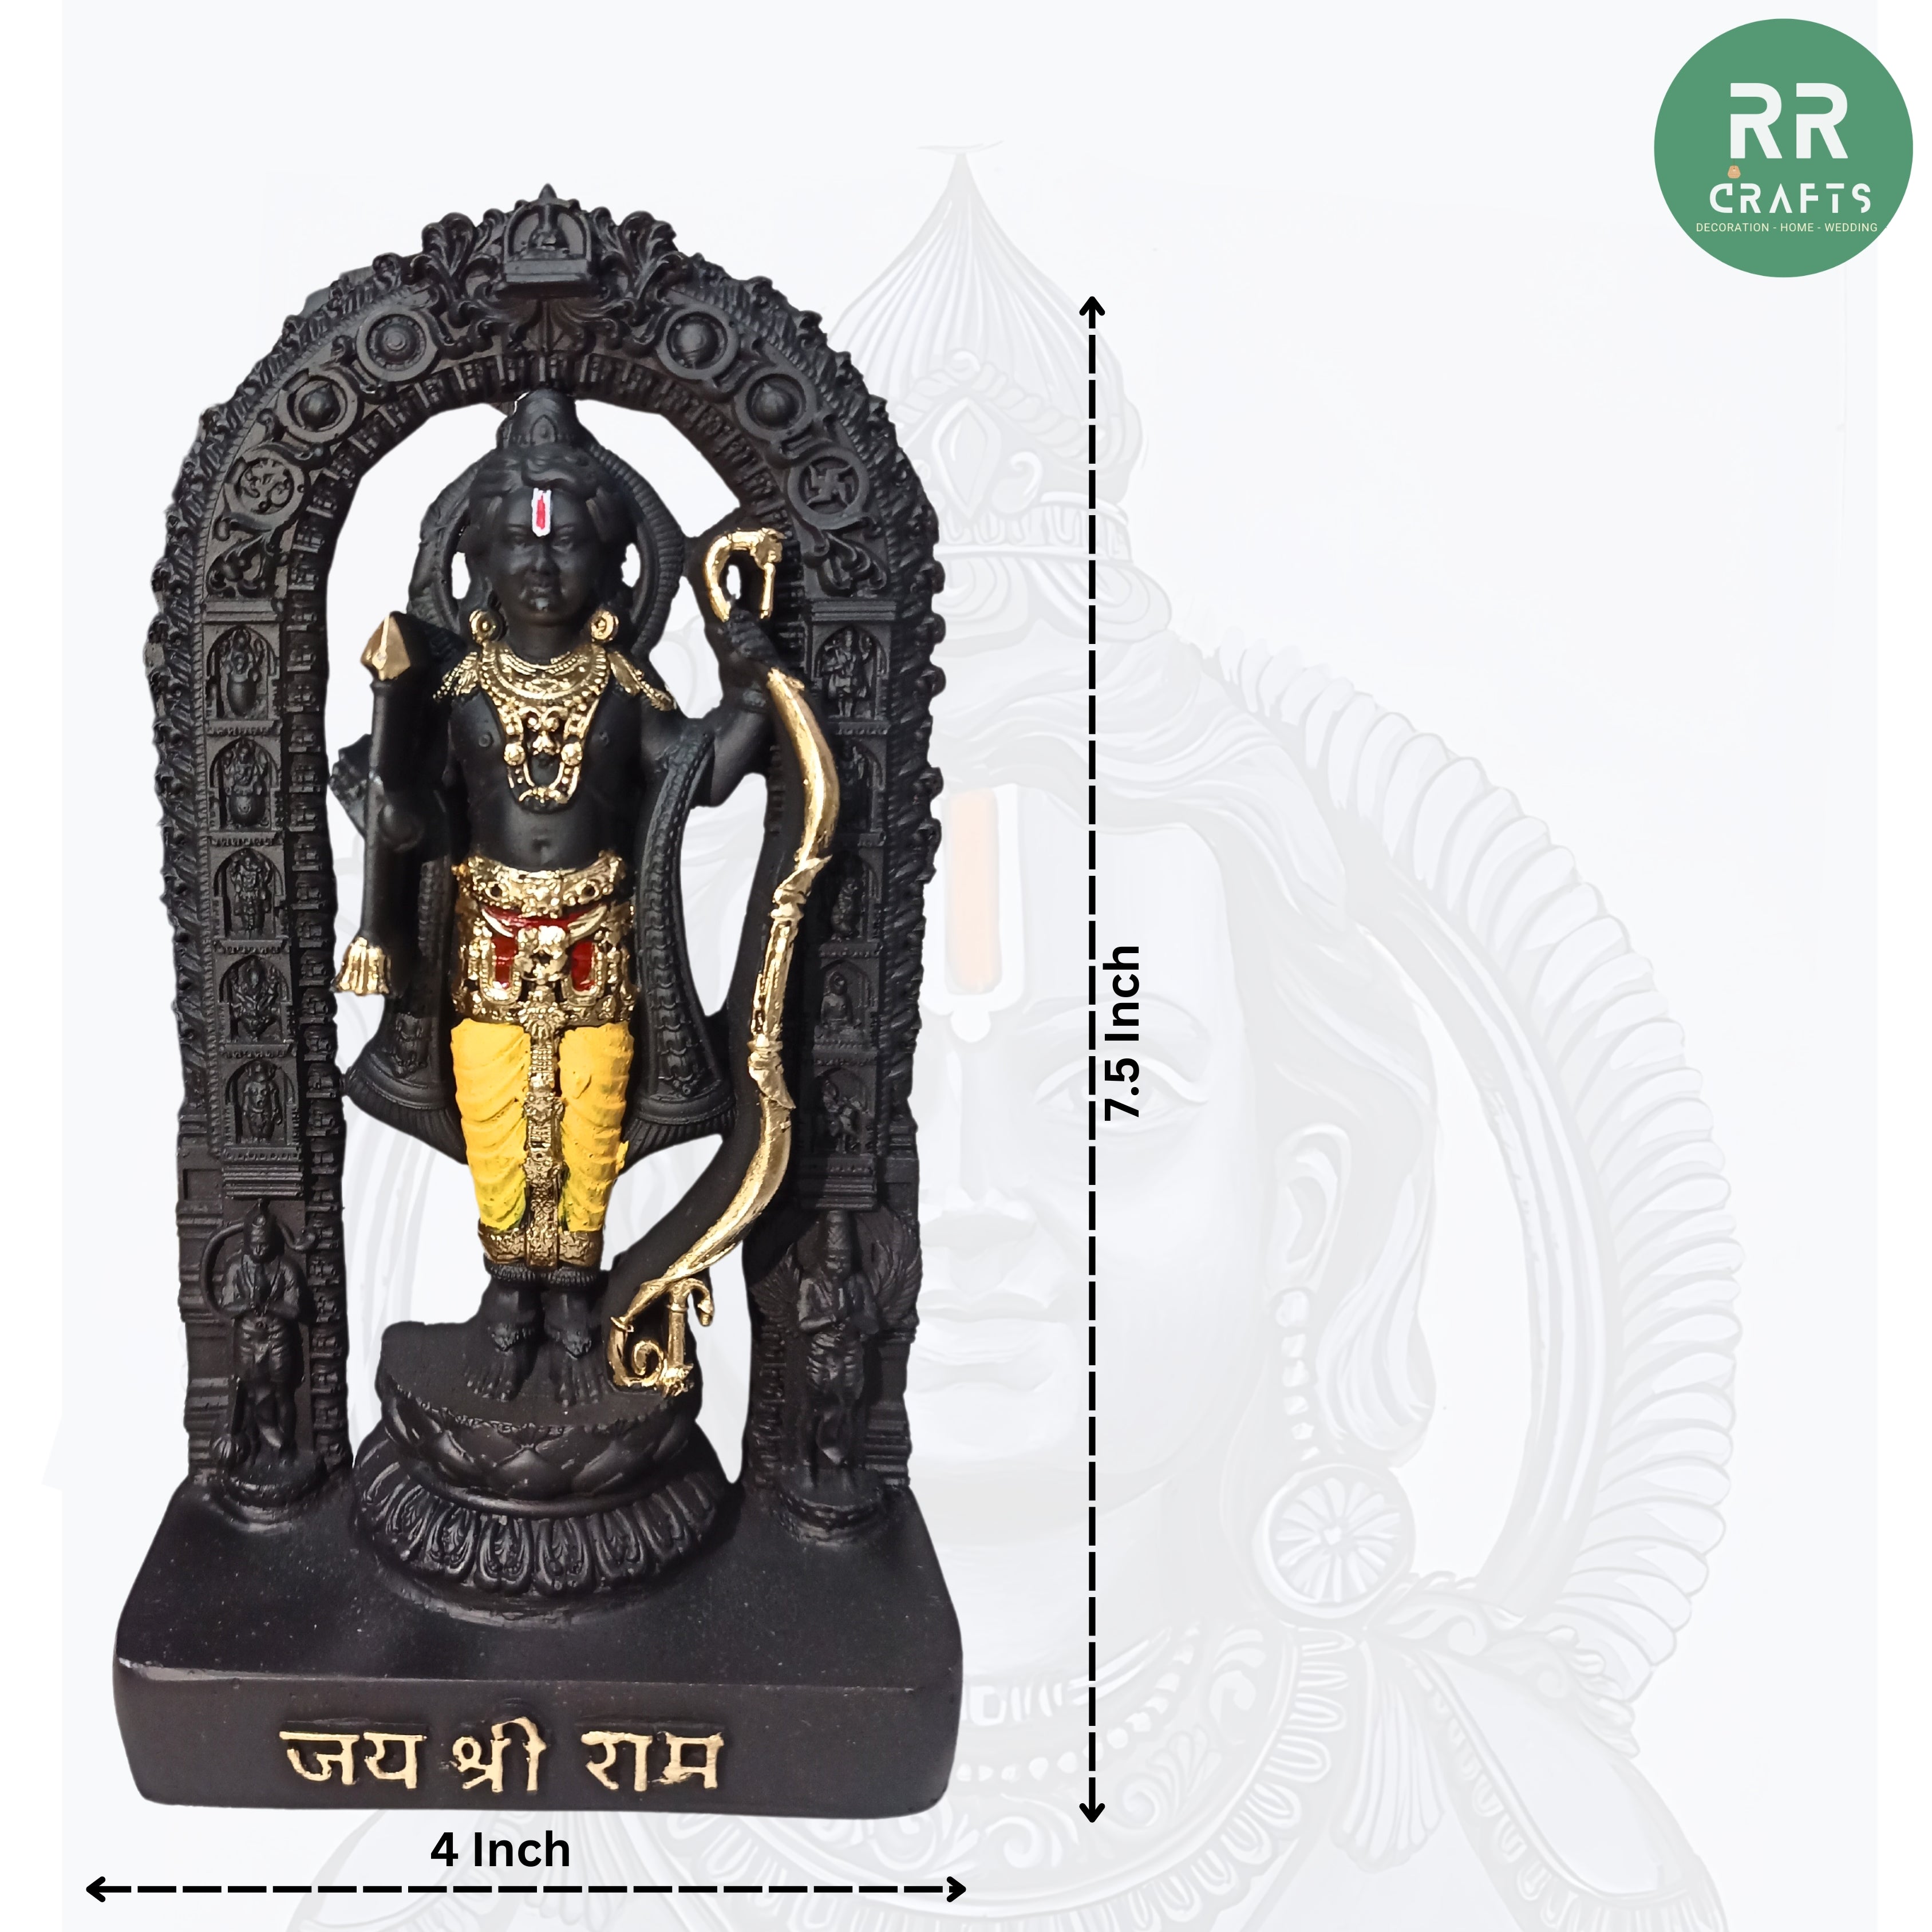 RR Crafts Lord Ram Idol/Religious Murti for Worship/Pooja (7.5 X 4 Inch) Showpiece for Home Decor.Raam/Ram Lalla/Shri Ram Mandir, Ayodhya wale, Gift Item(Multicolour)